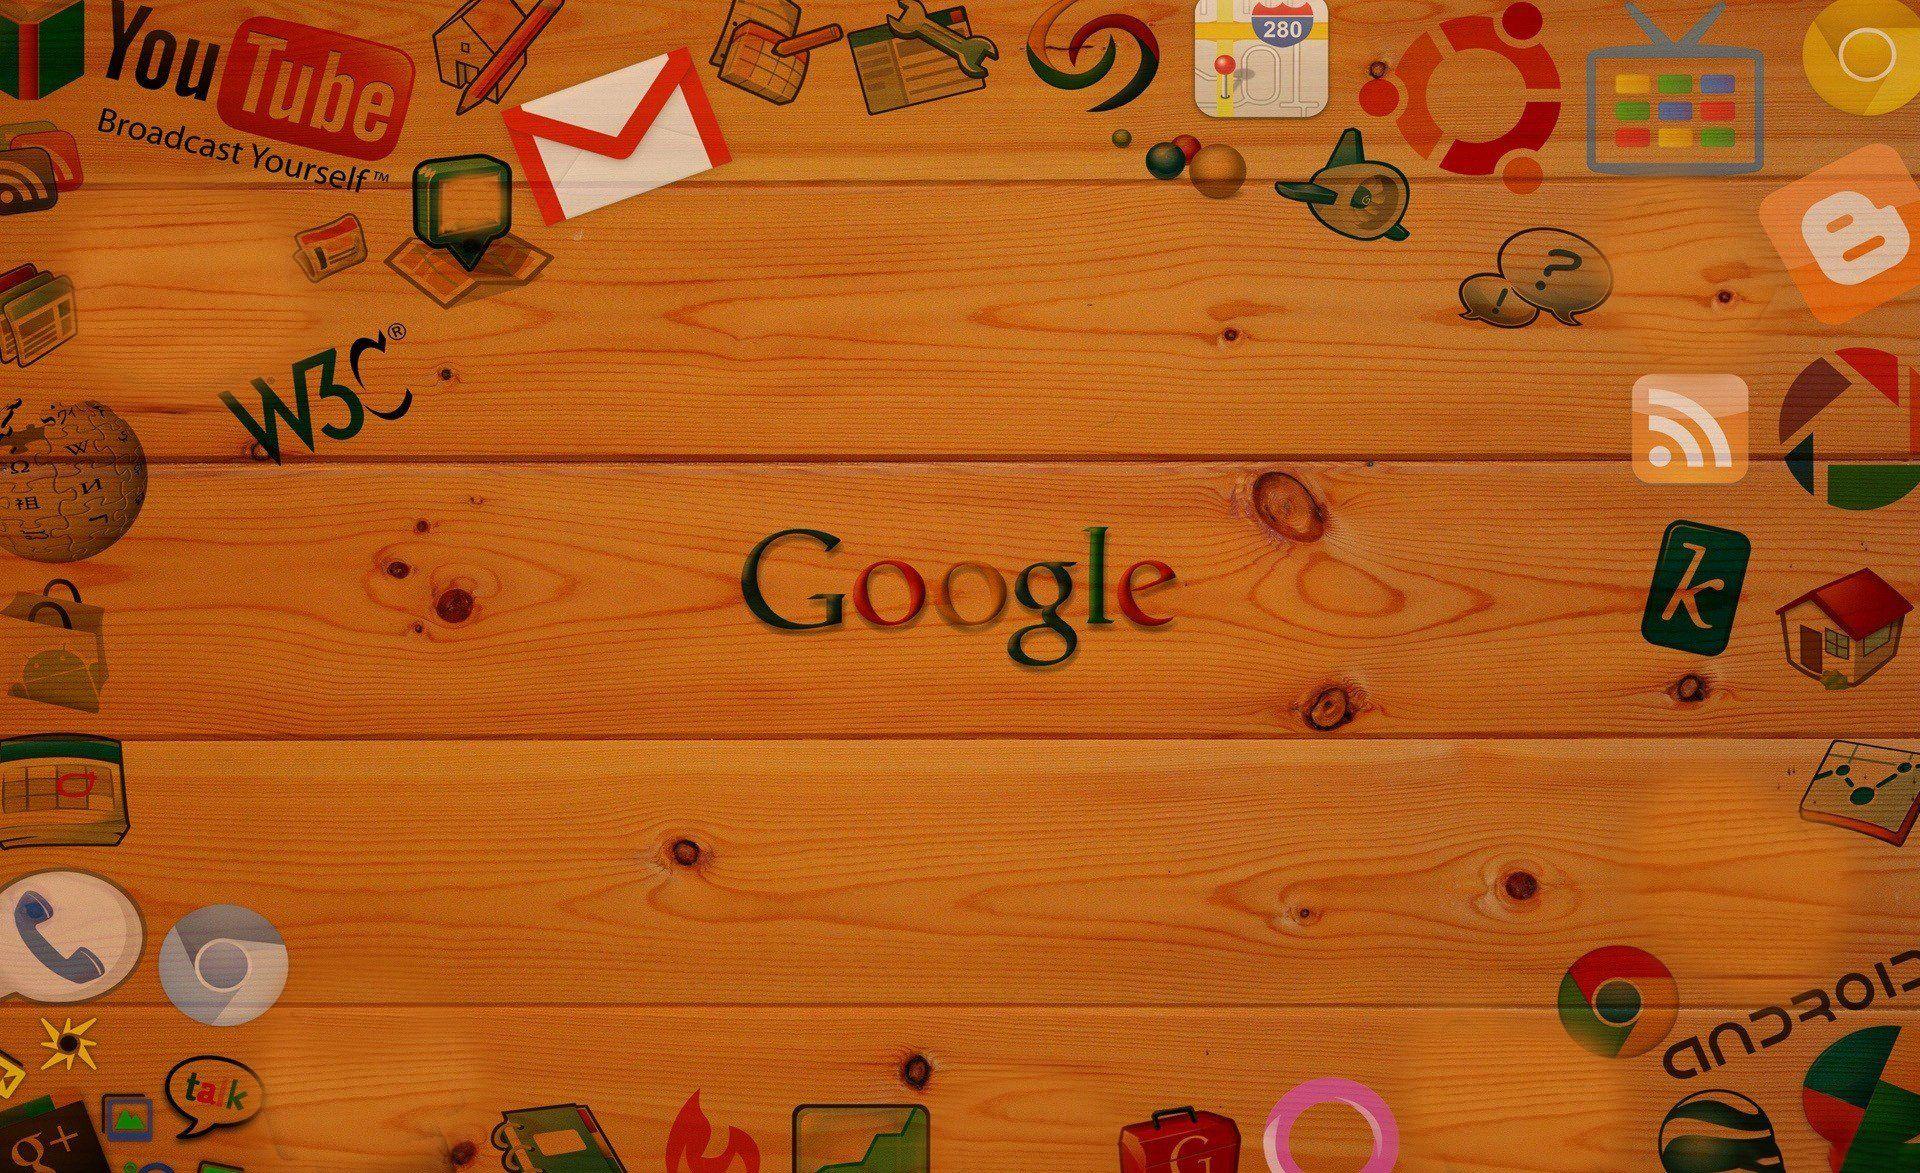 Google Desktop Backgrounds Wallpaper Cave Afalchi Free images wallpape [afalchi.blogspot.com]